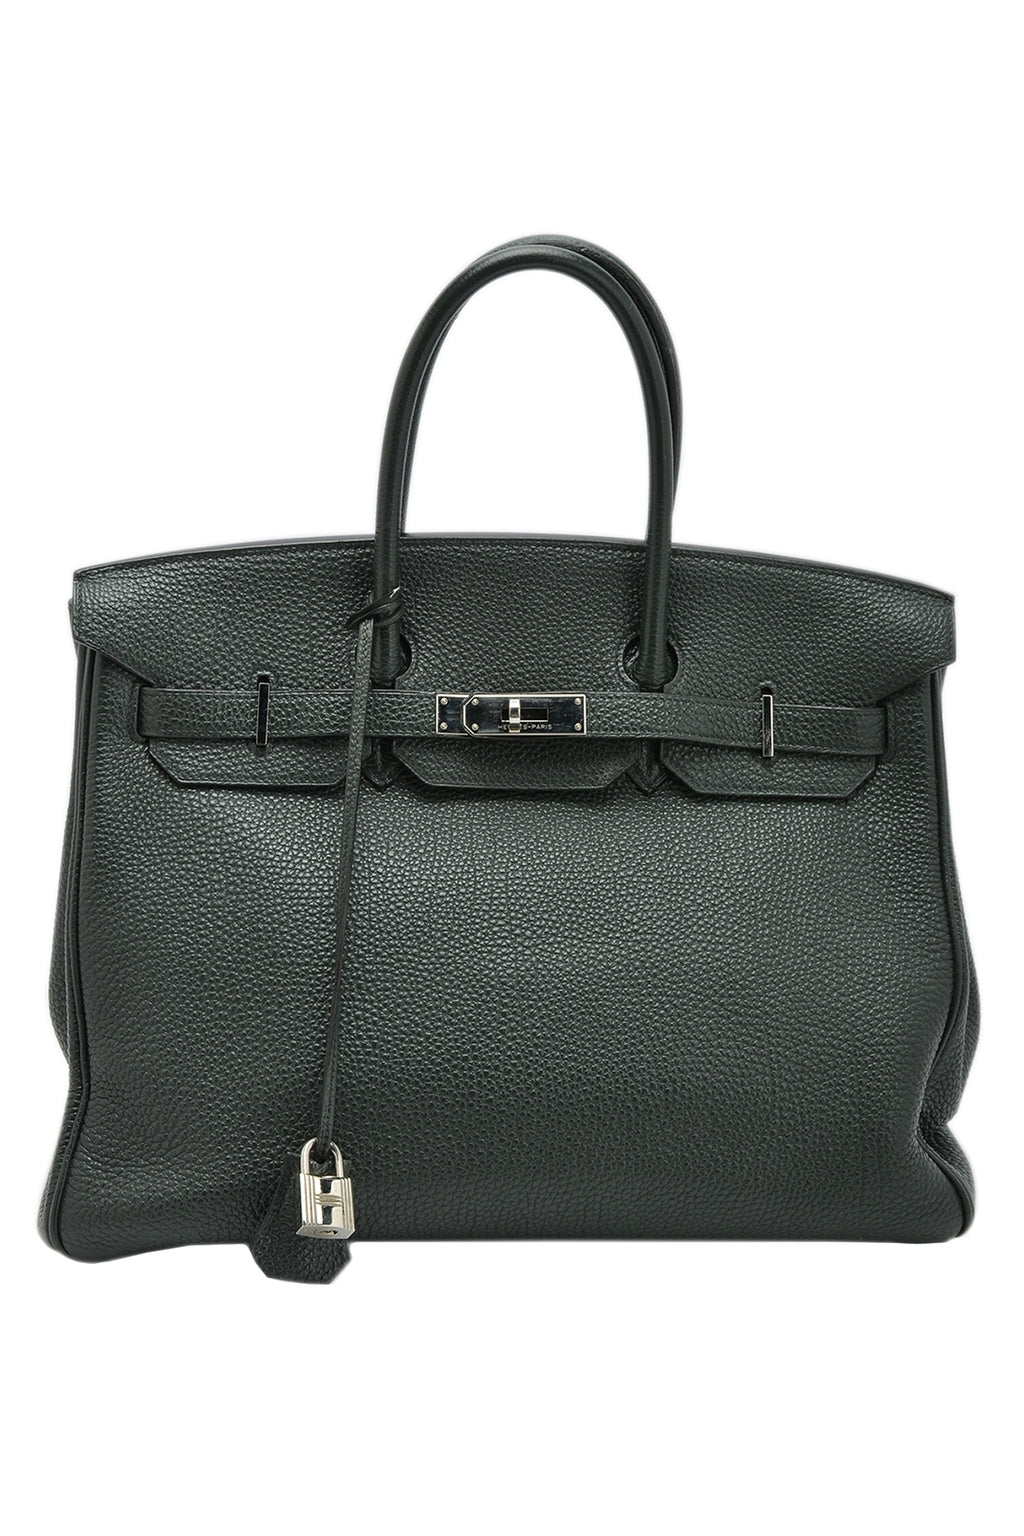 Hermes Olive Green Togo Leather Palladium Hardware Birkin 35 Bag